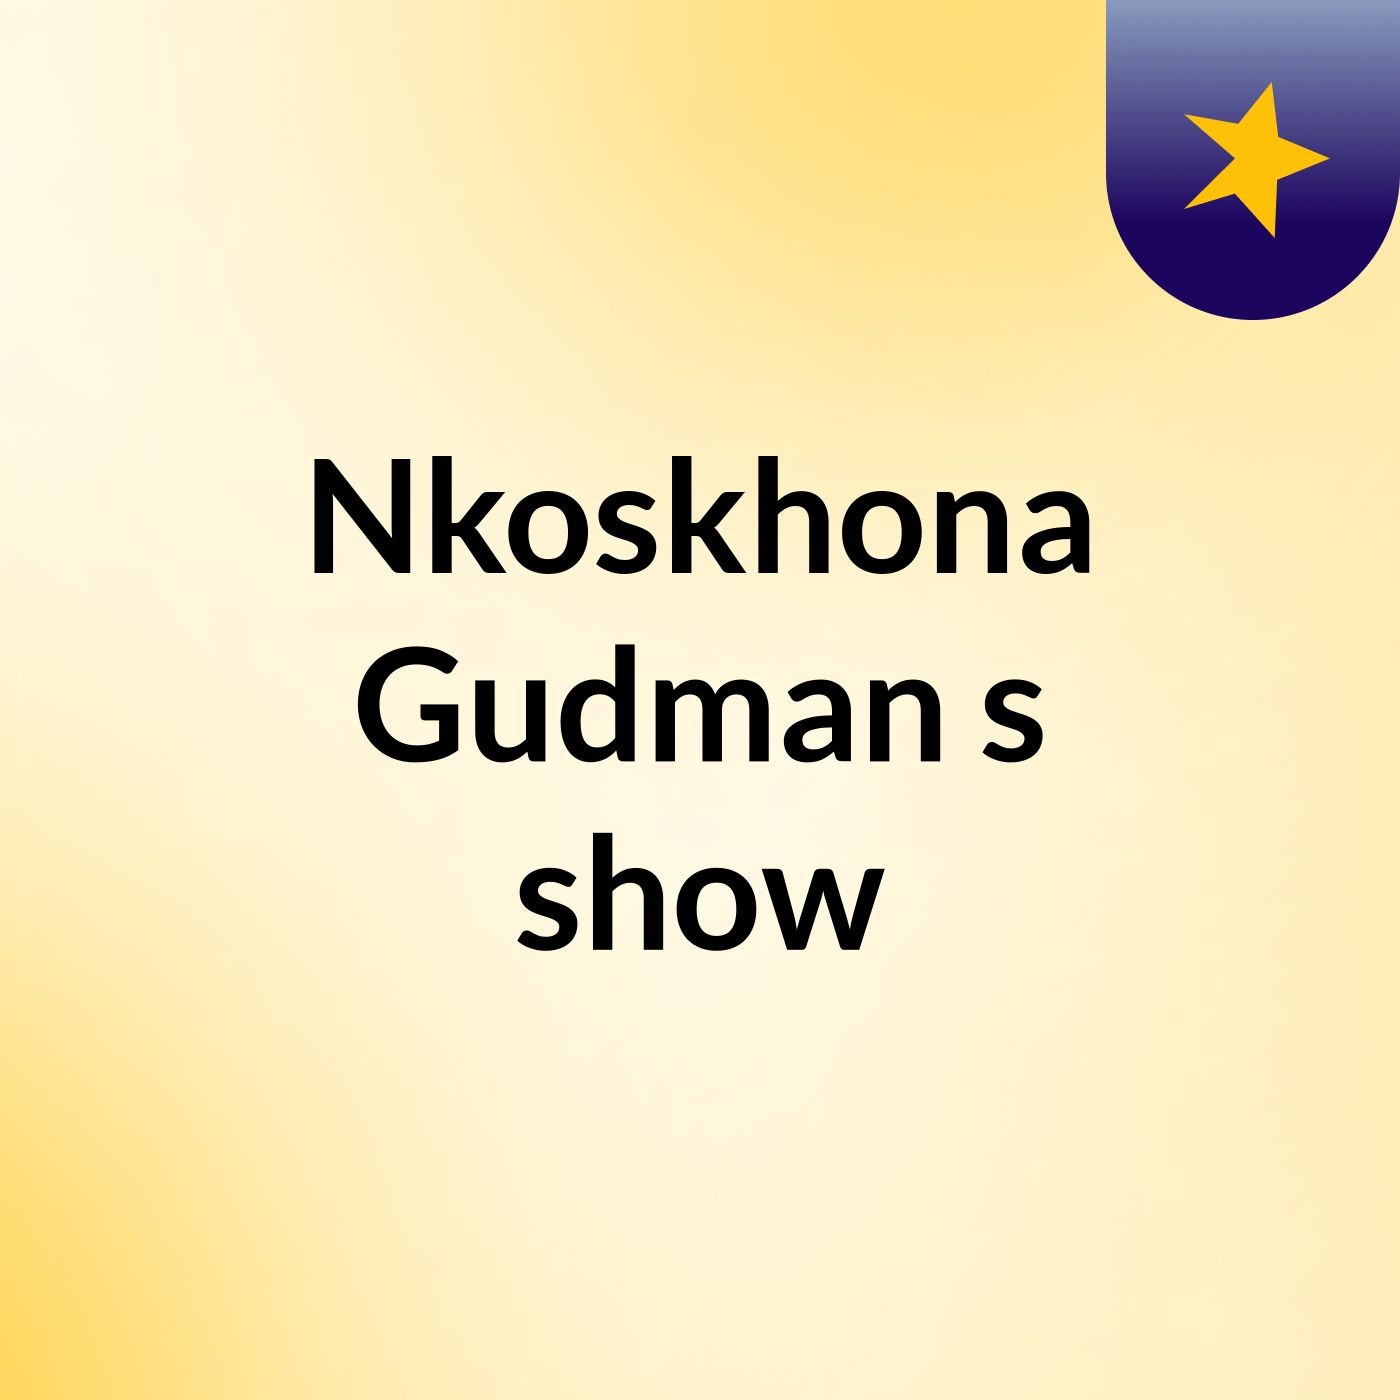 Episode 8 - Nkoskhona Gudman's show